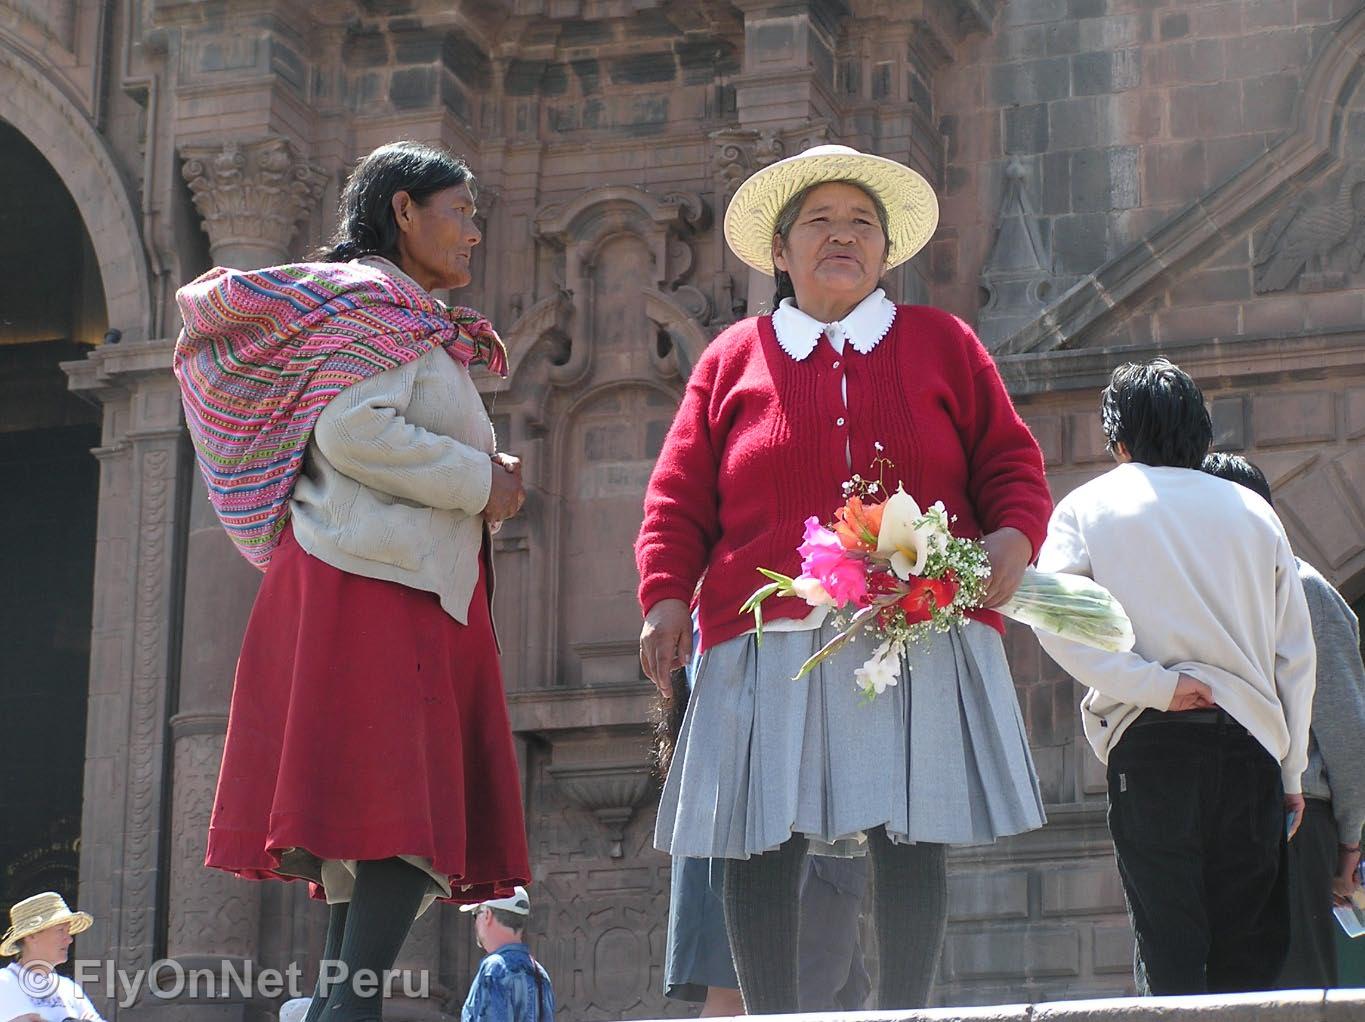 Photo Album: Women from Cusco, Cuzco